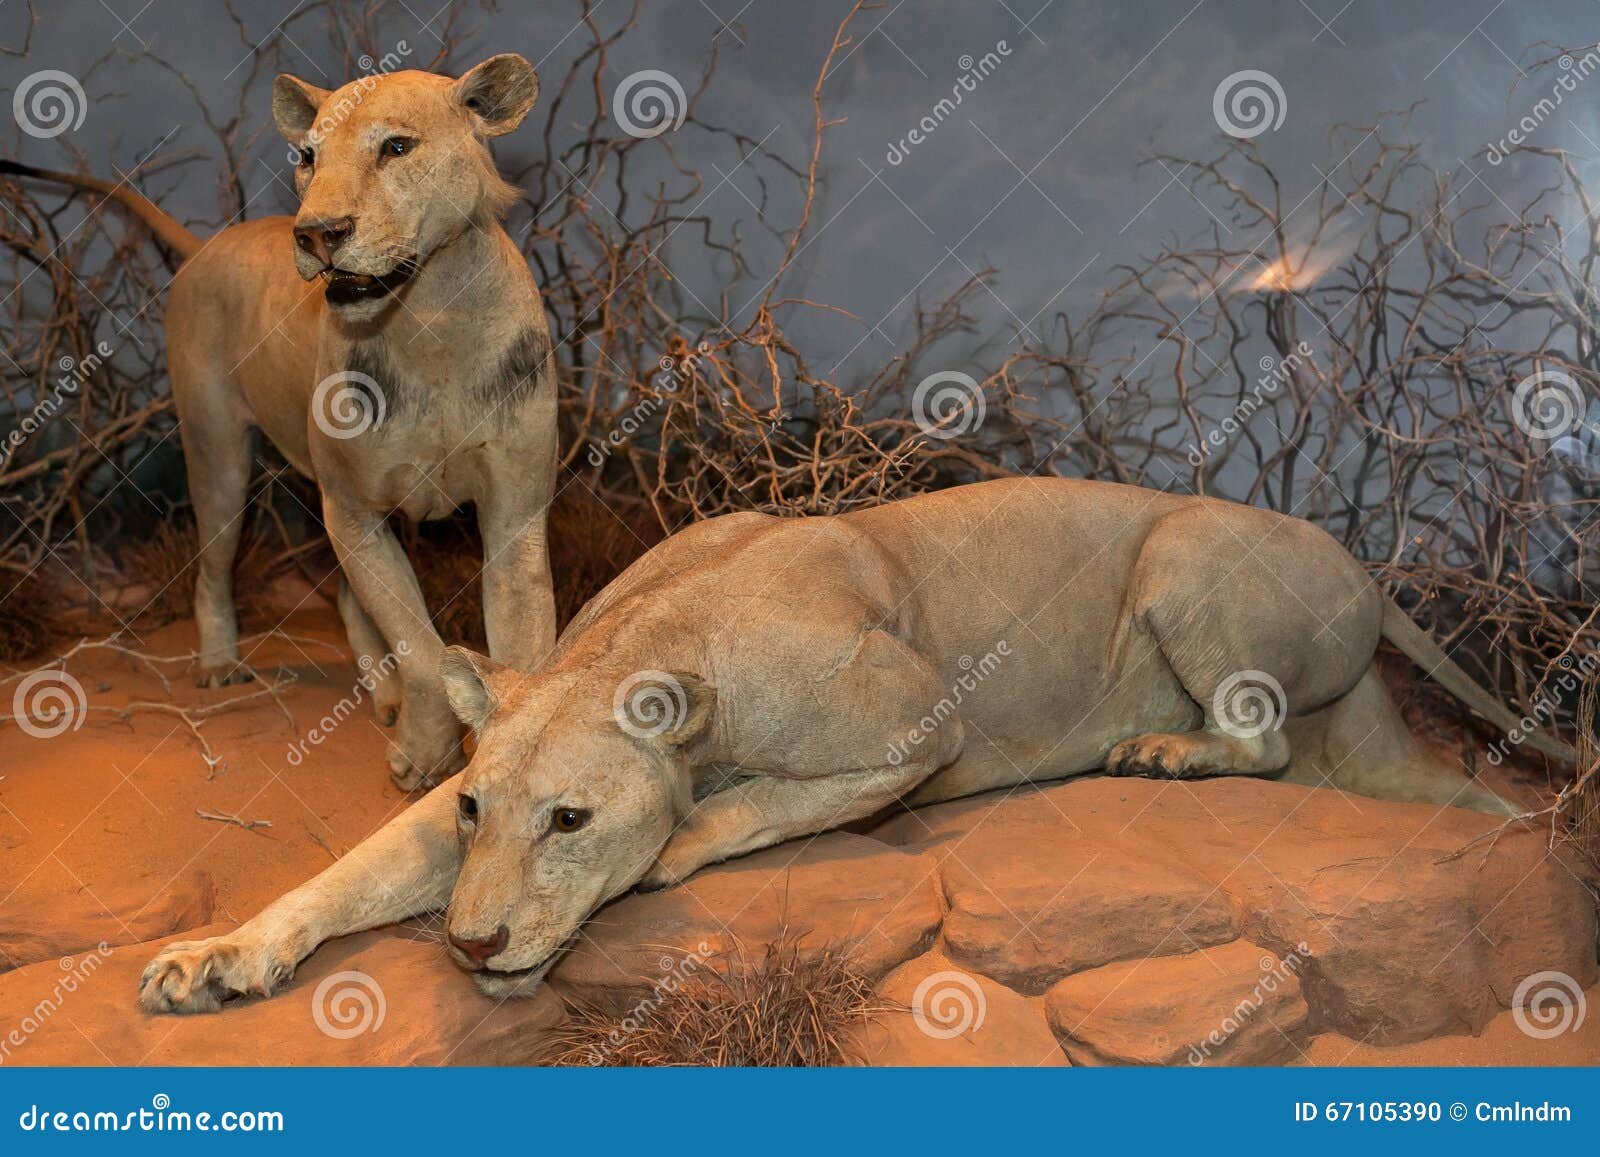 Man Eating Maneless Lions of Tsavo Editorial Image - Image of maneless,  lions: 67105390